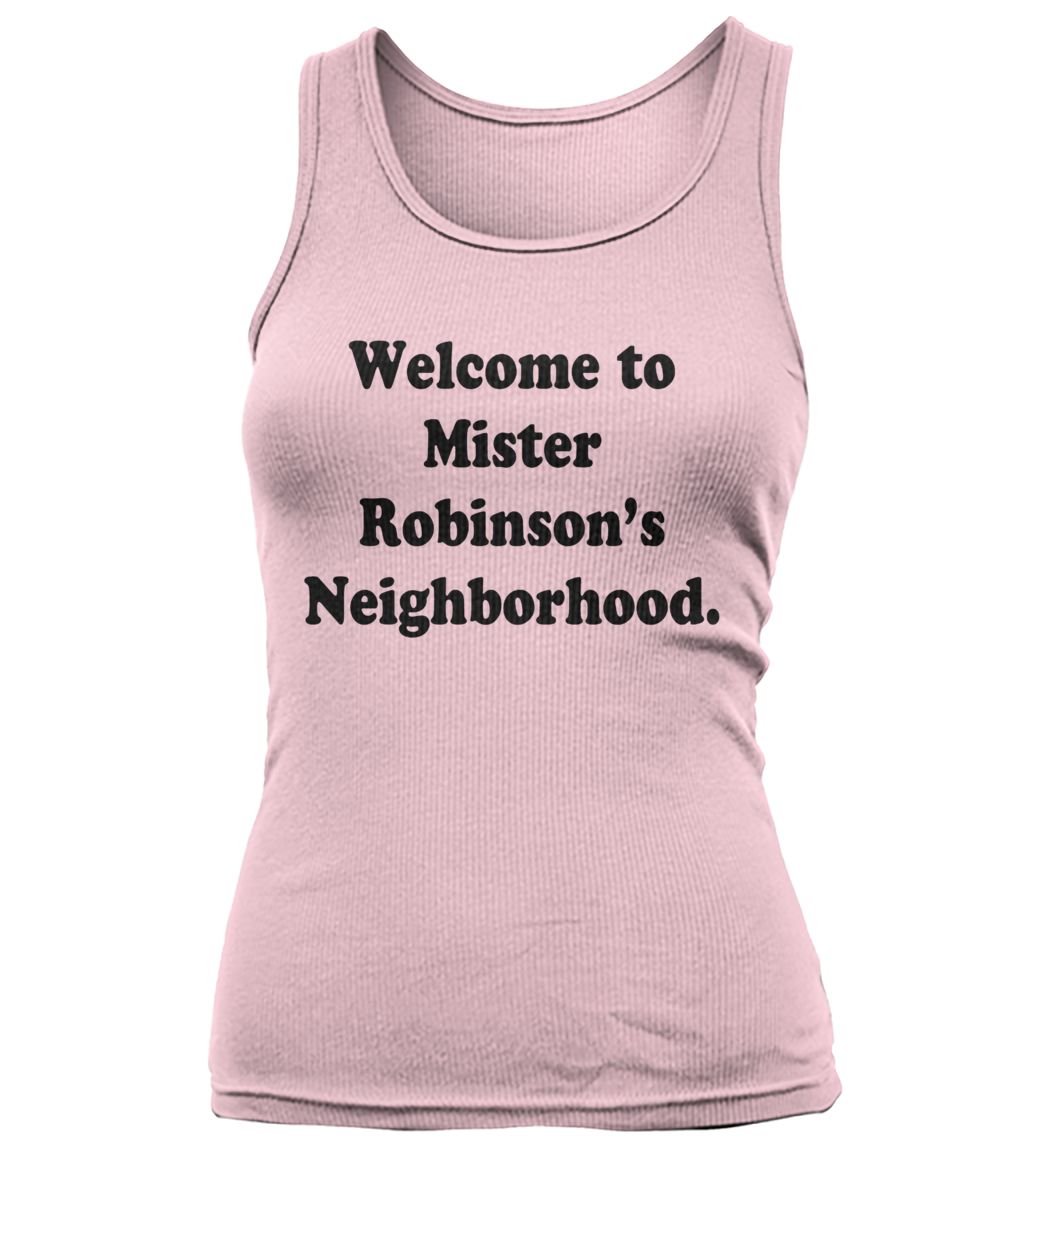 Welcome to mister robinson's neighborhood women's tank top